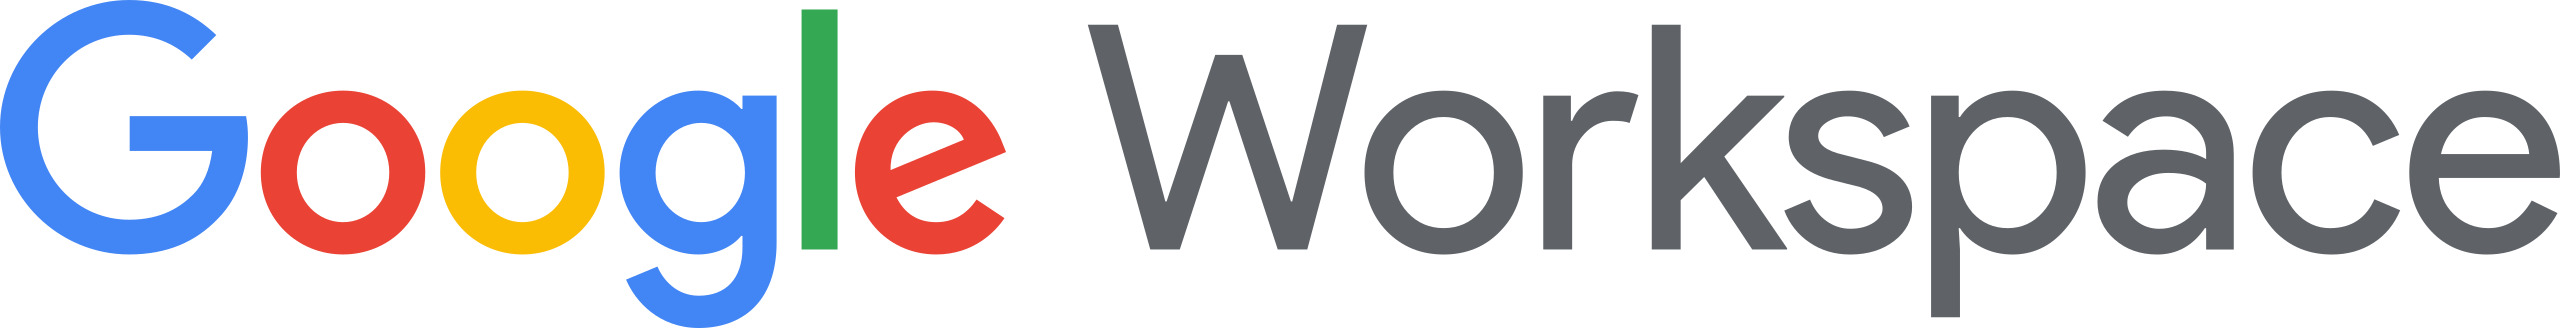 Google Workspaces-logo